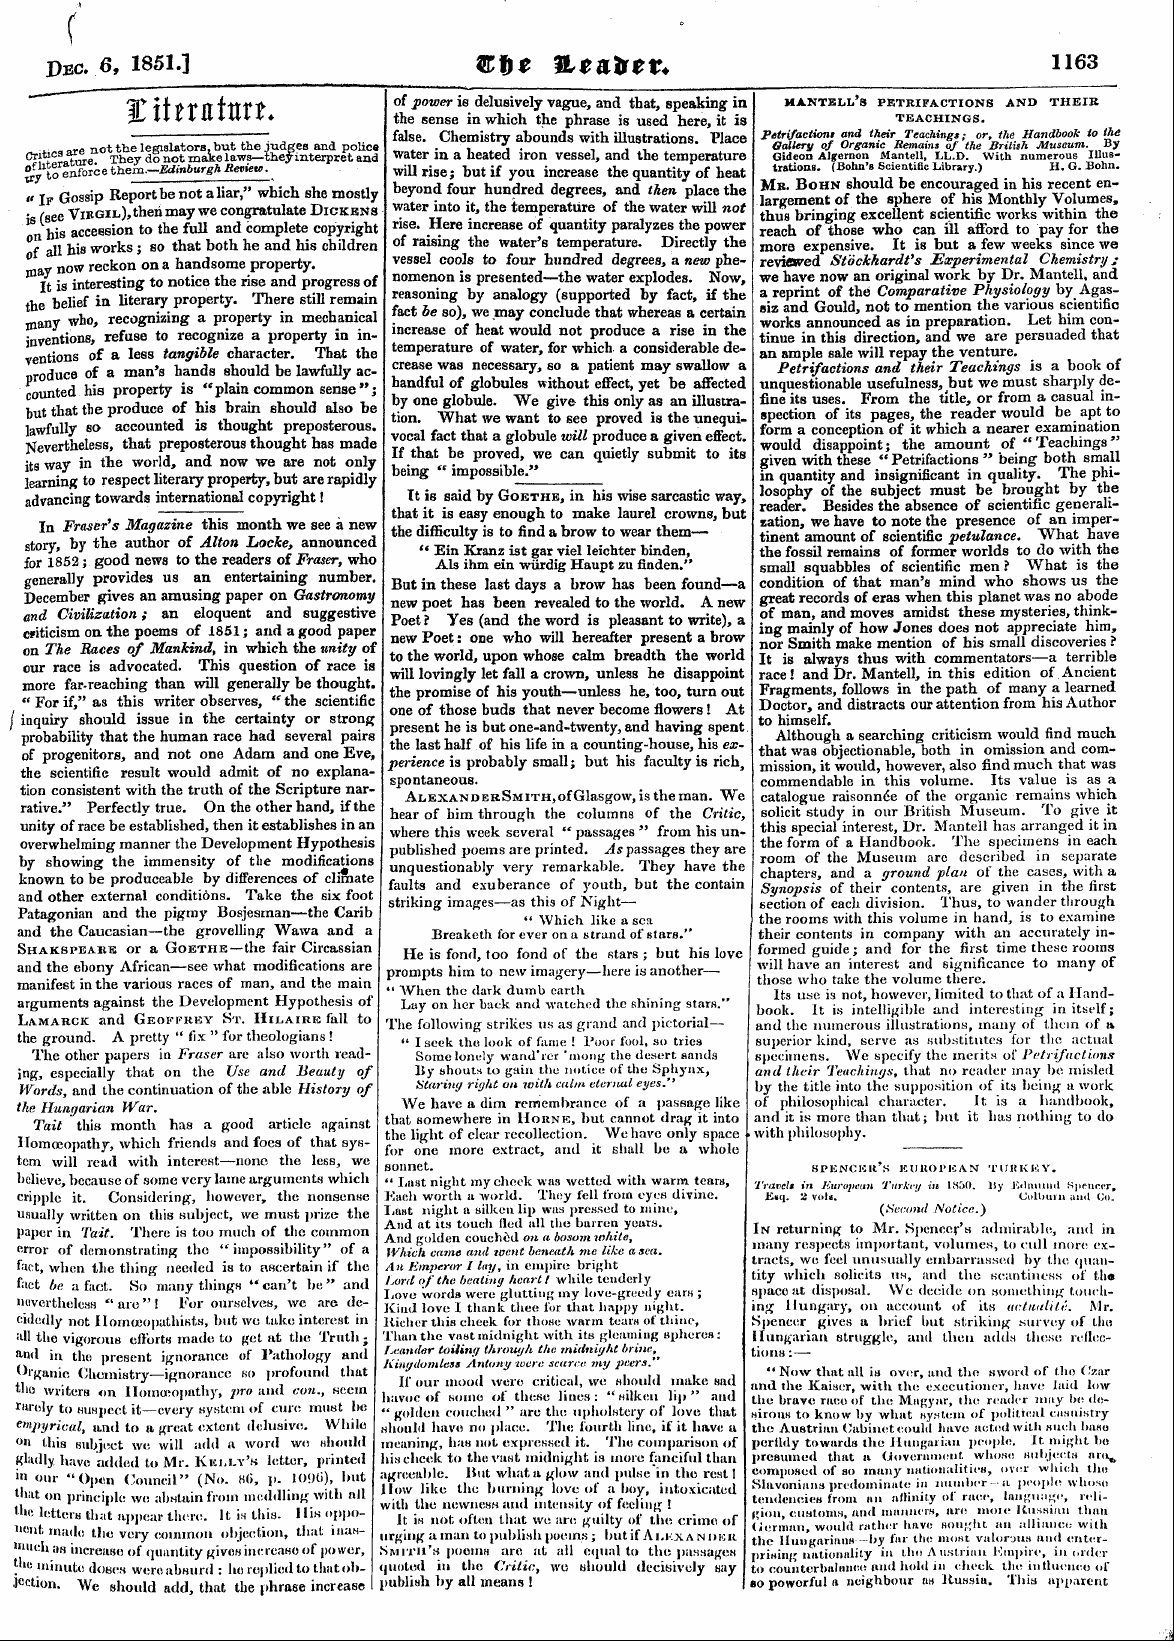 Leader (1850-1860): jS F Y, Country edition - Litttatort.